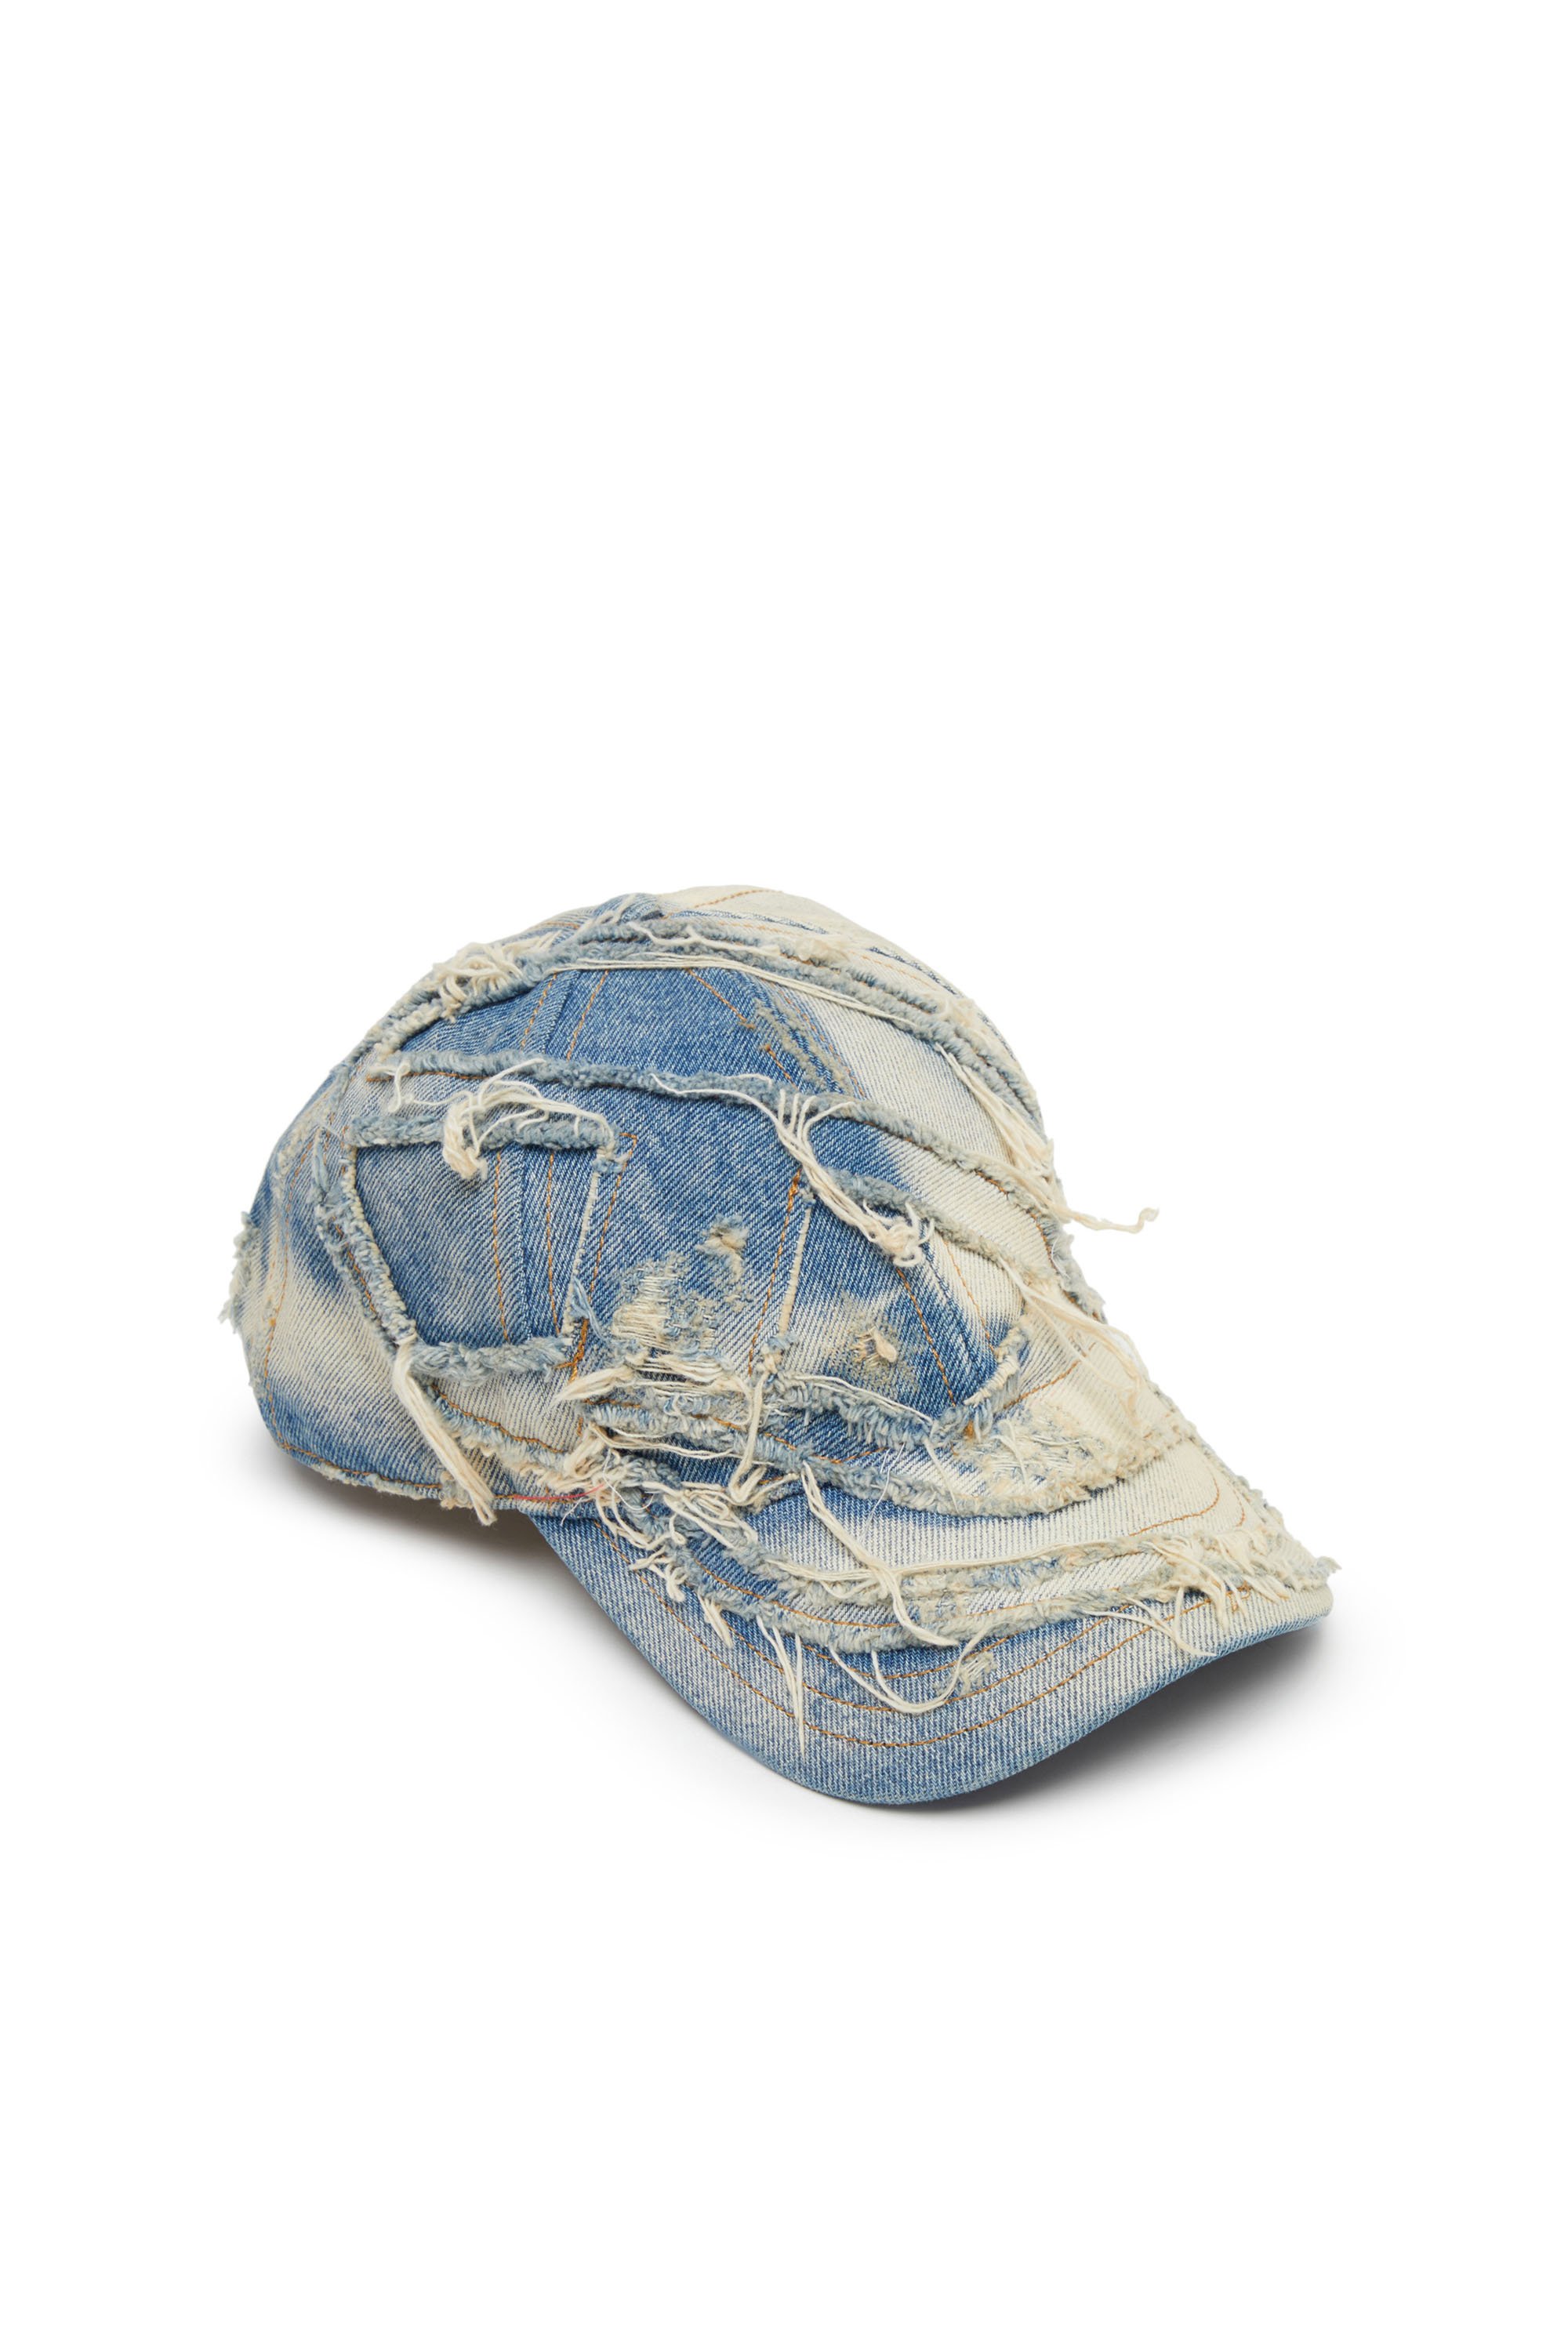 Diesel - C-OBI-DNM, Man Baseball hat in destroyed denim in Blue - Image 3